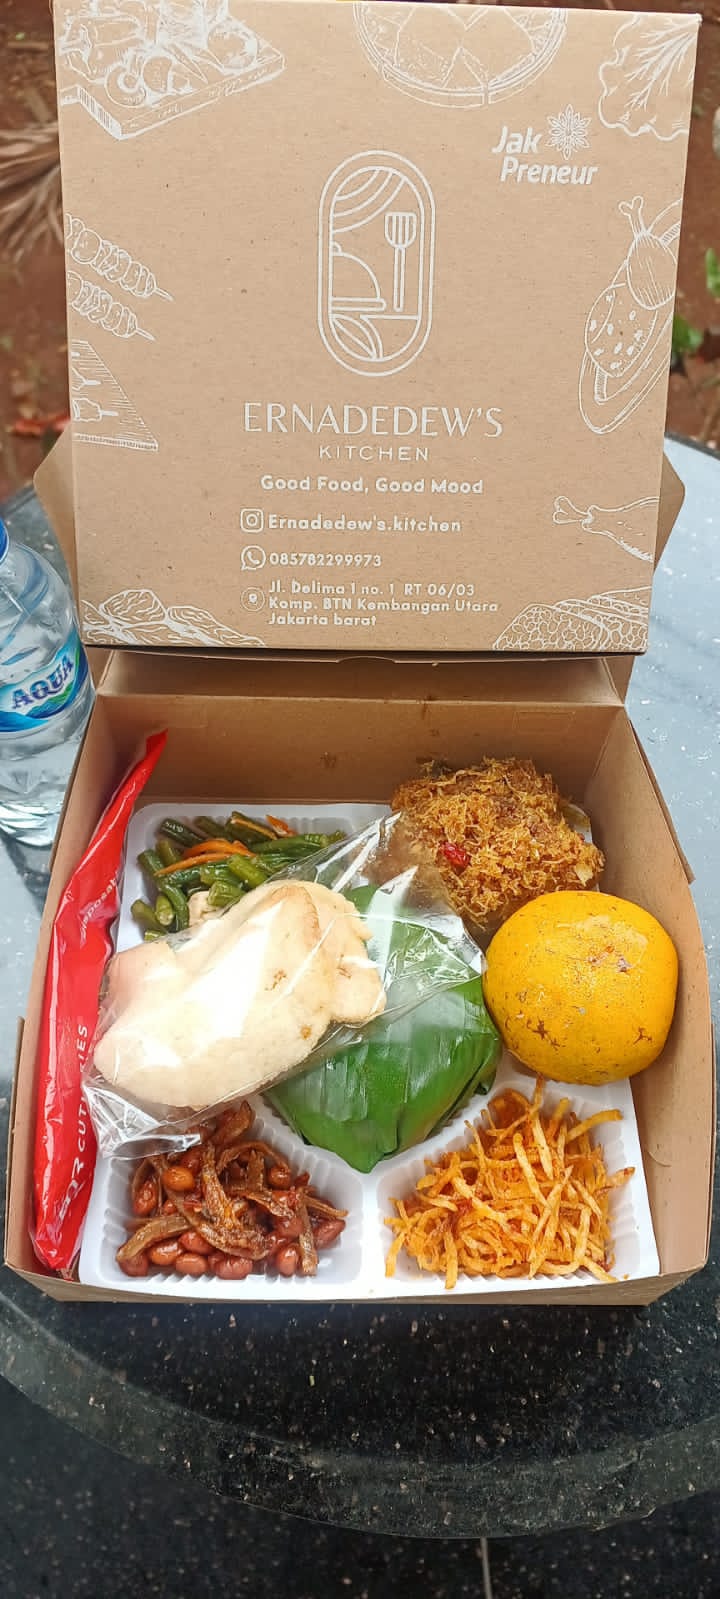 Lunch Box